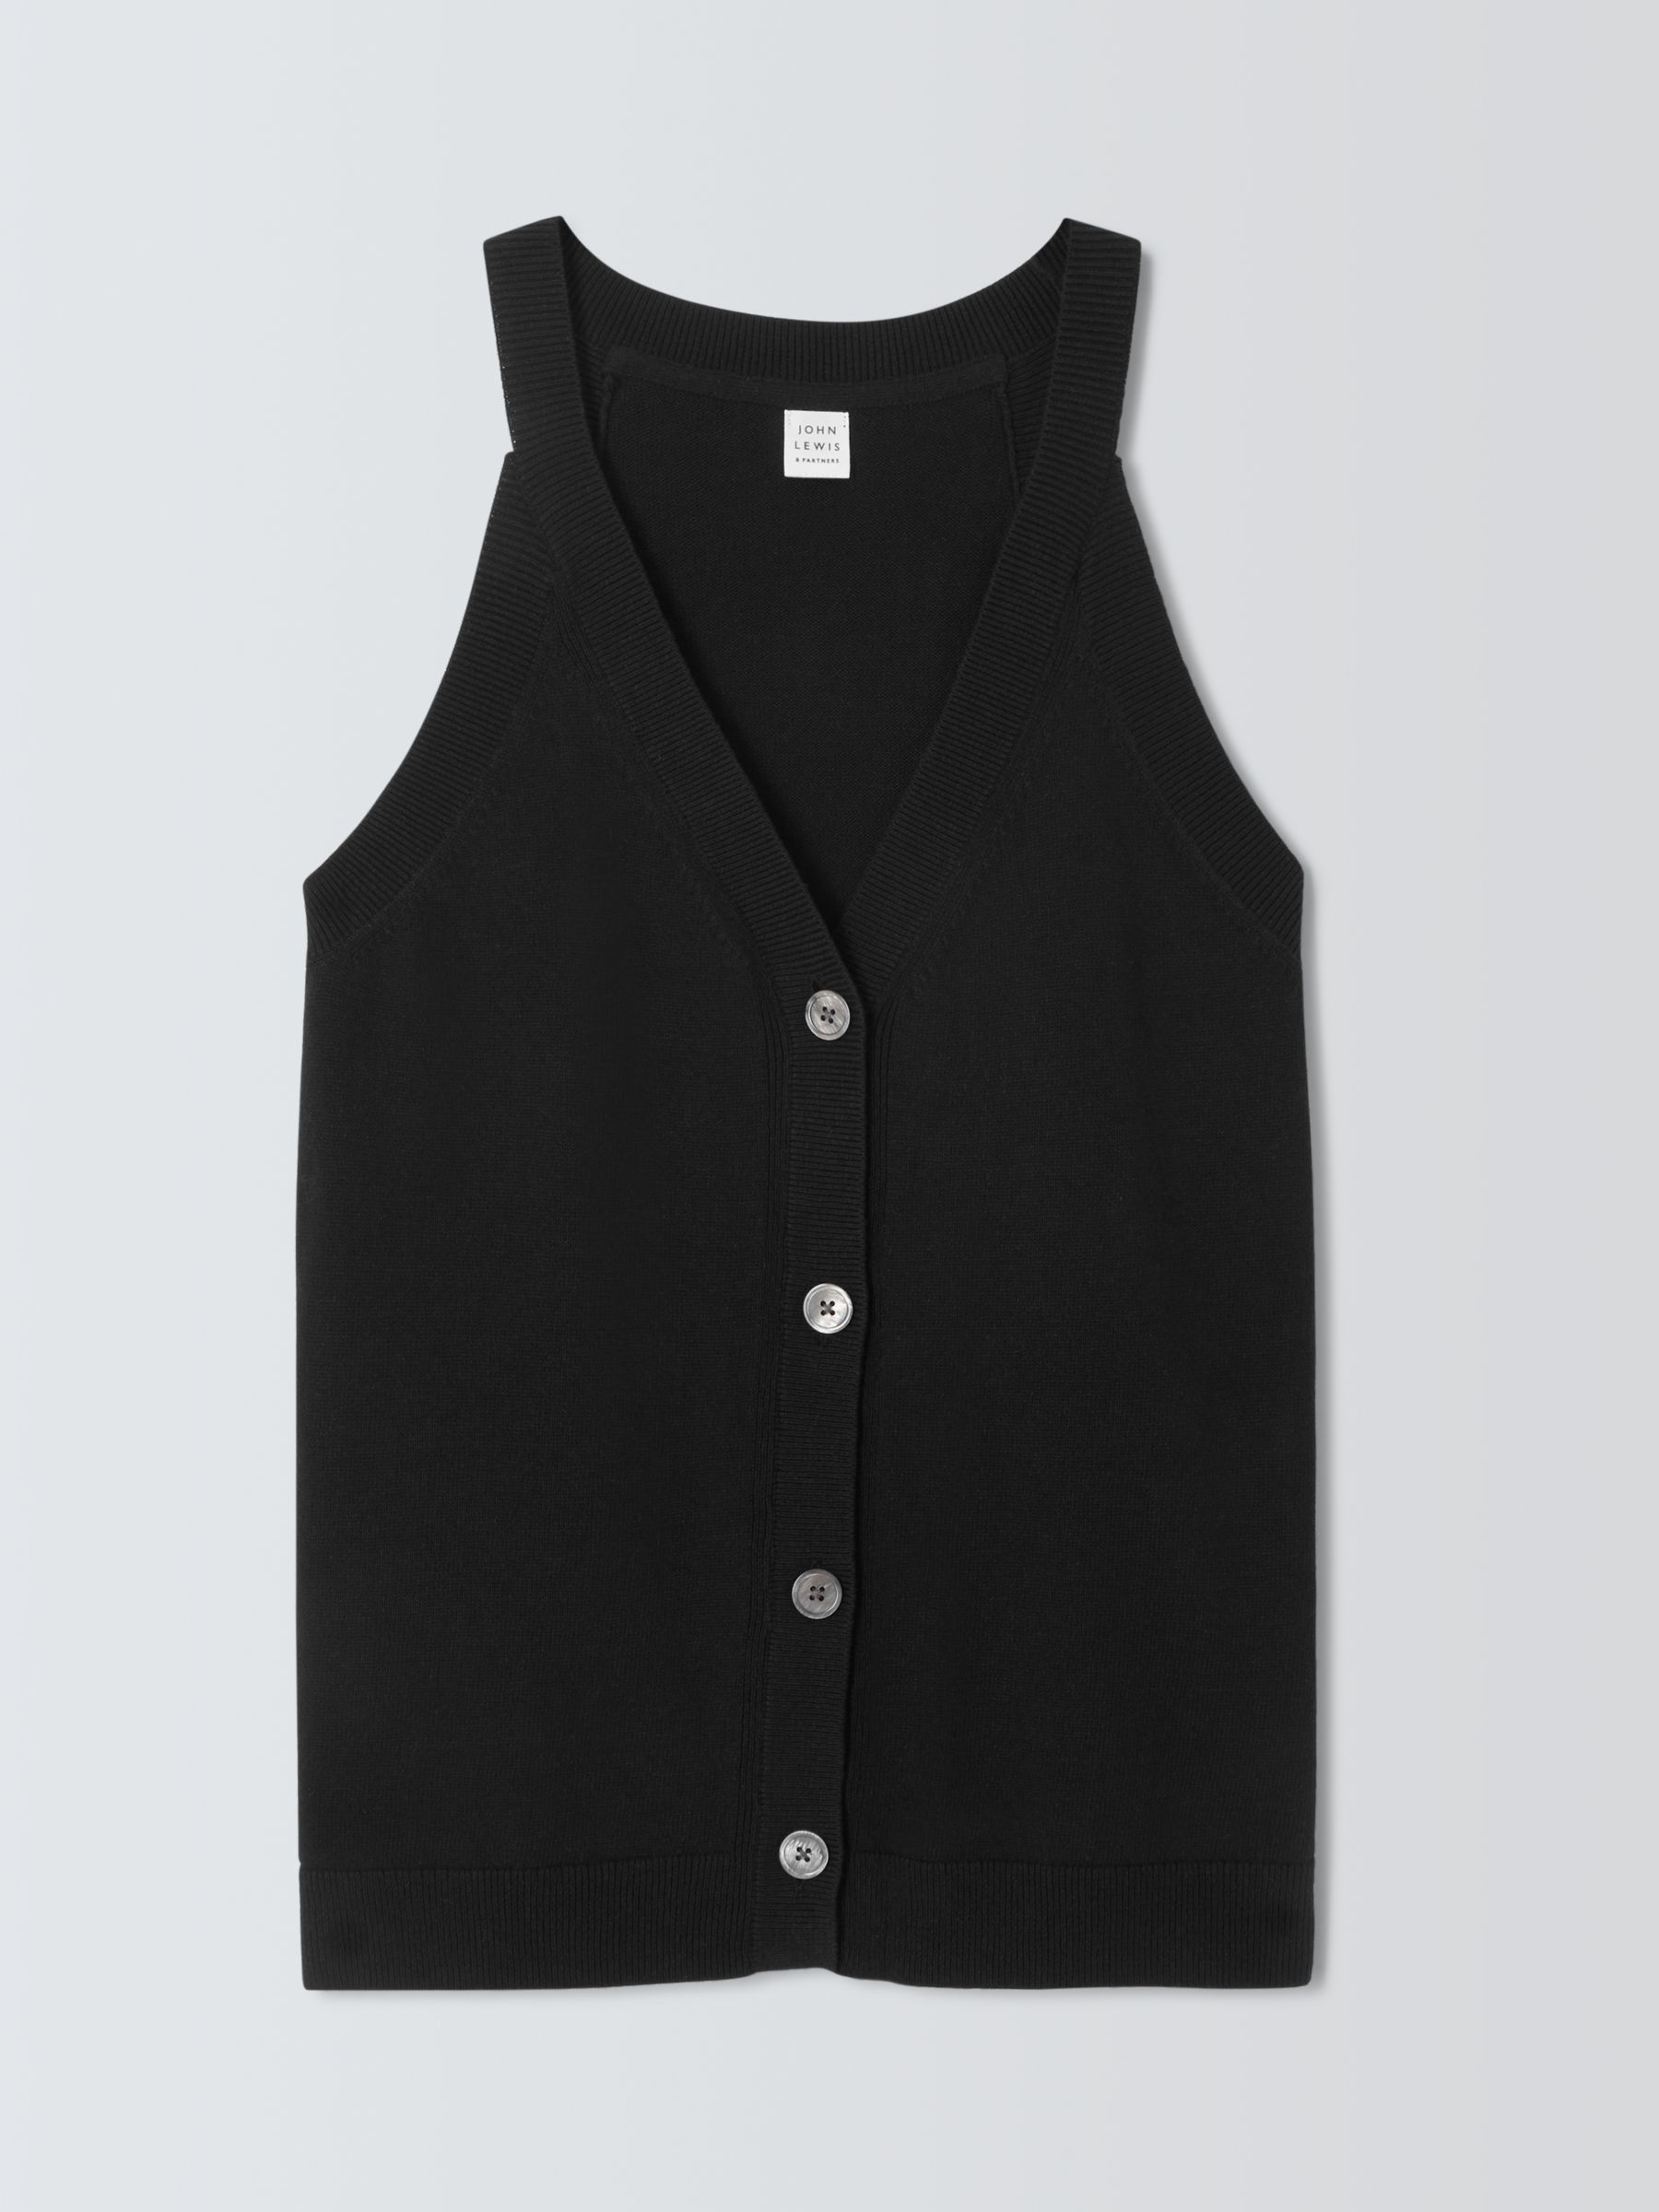 John Lewis Linen Blend Waistcoat Vest Top, Black, XS